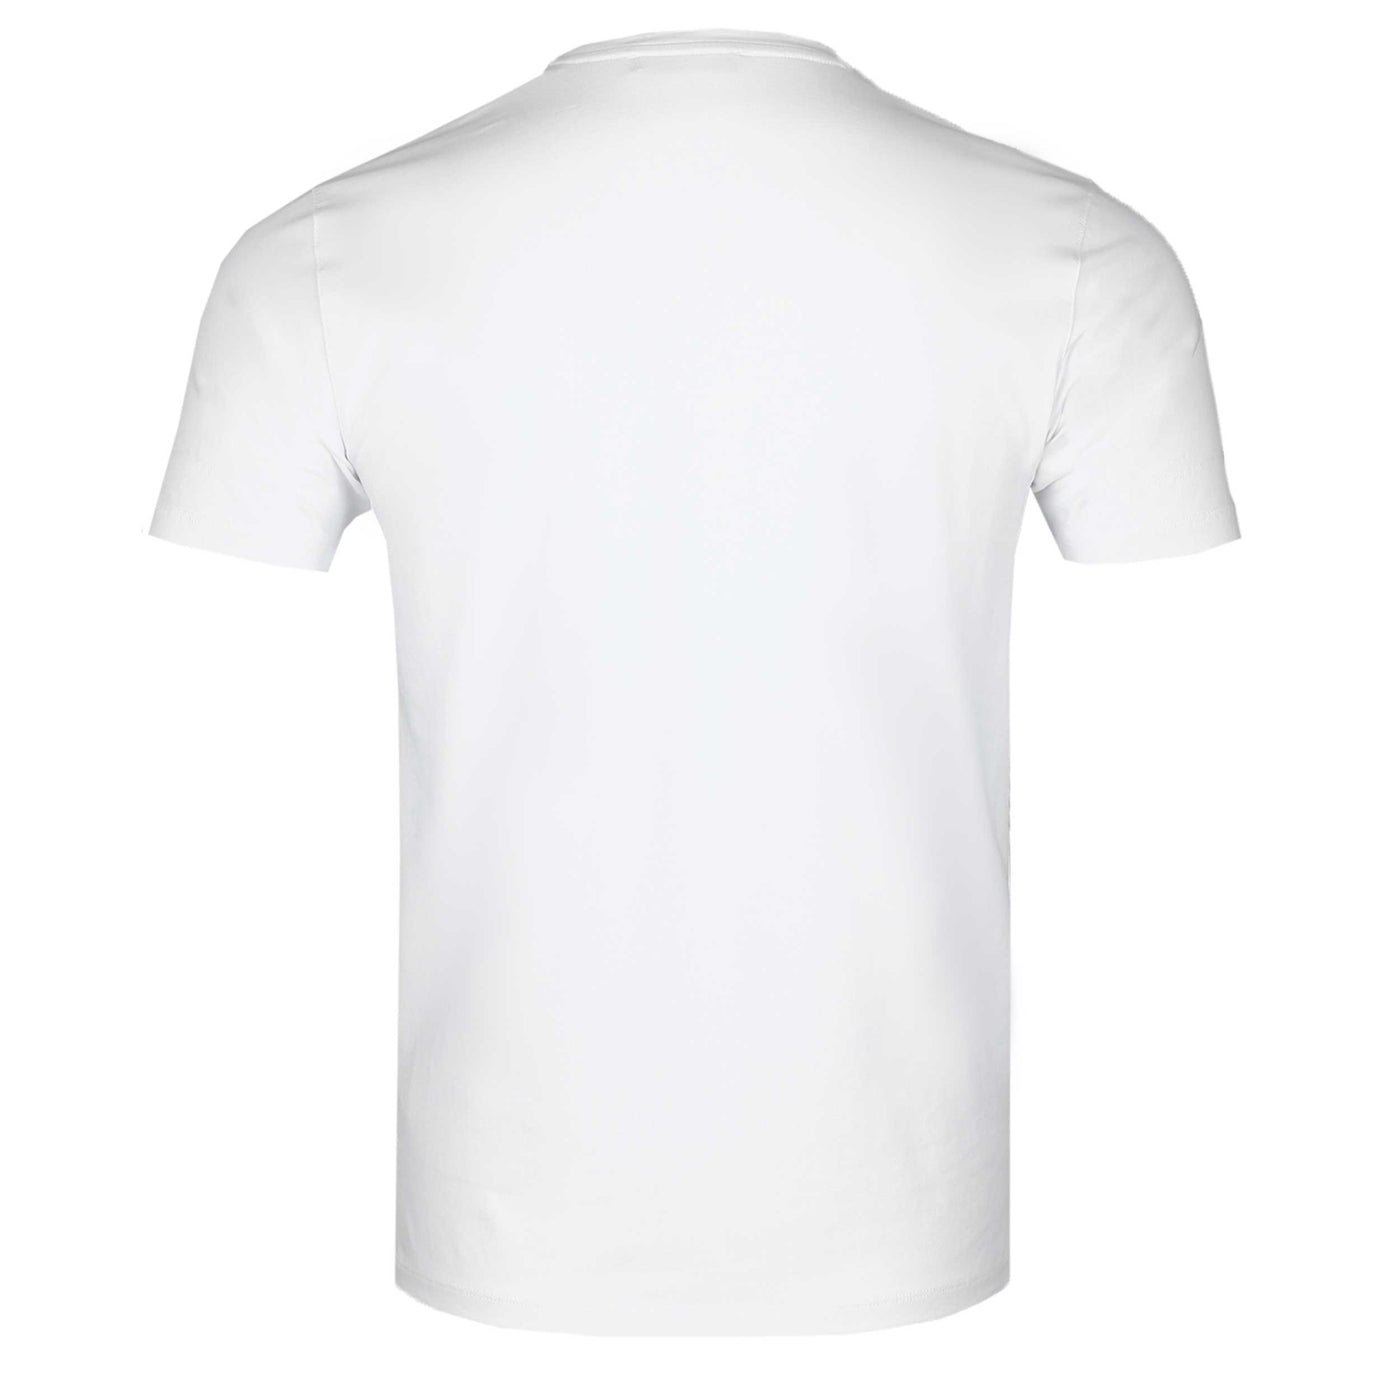 Remus Uomo Basic Crew Neck T-Shirt in White | Remus Uomo | Norton Barrie